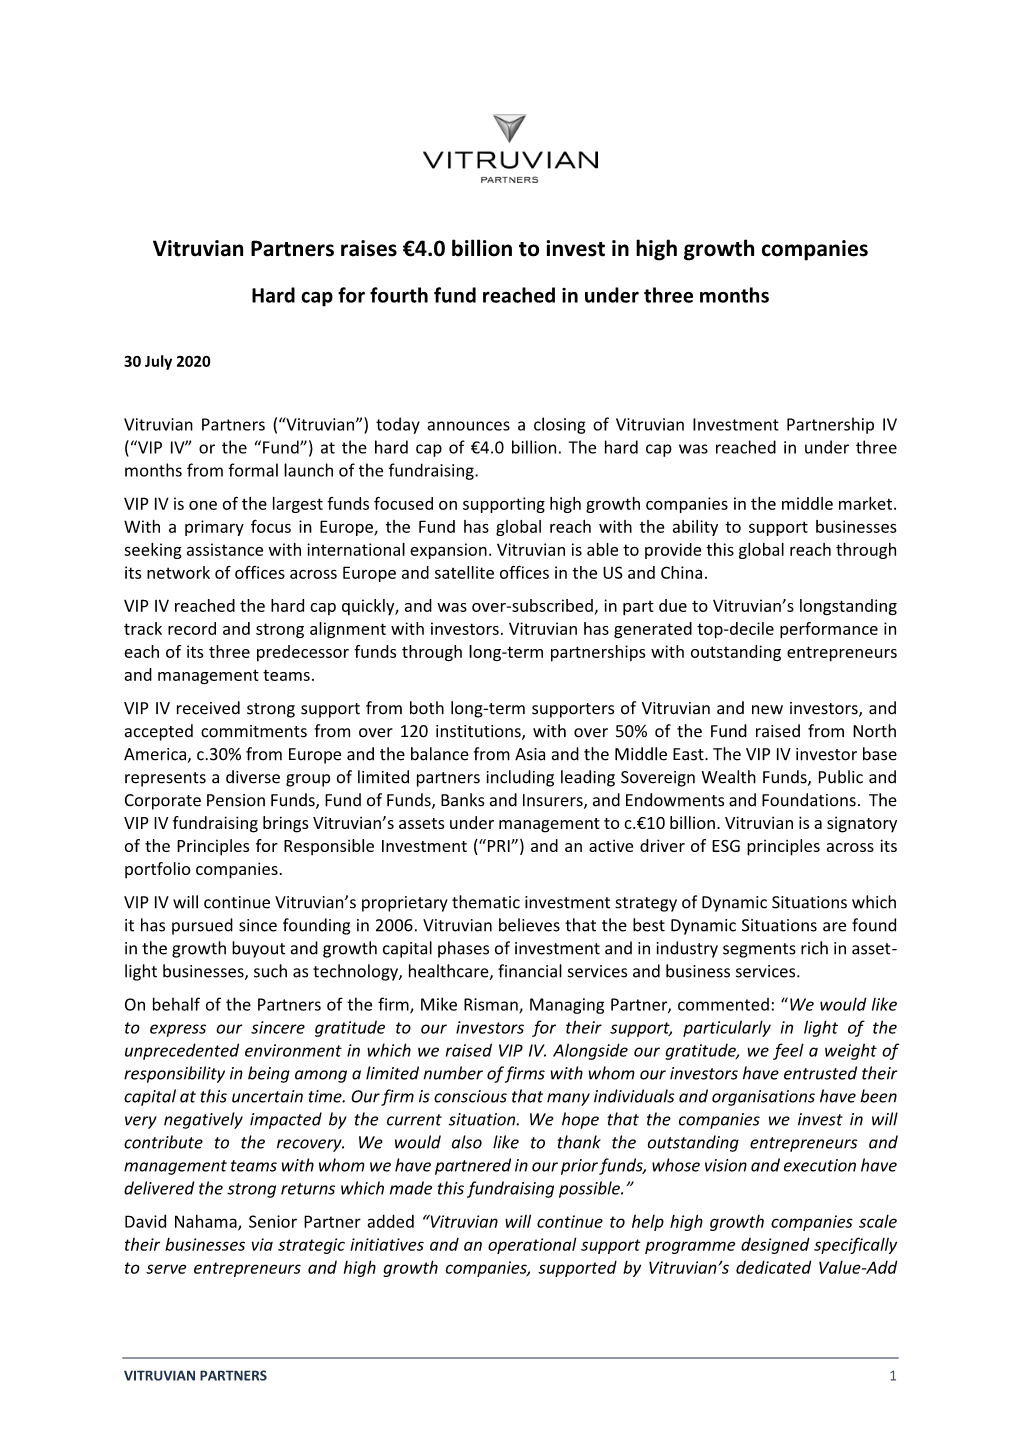 Vitruvian Partners Raises €4.0 Billion to Invest in High Growth Companies